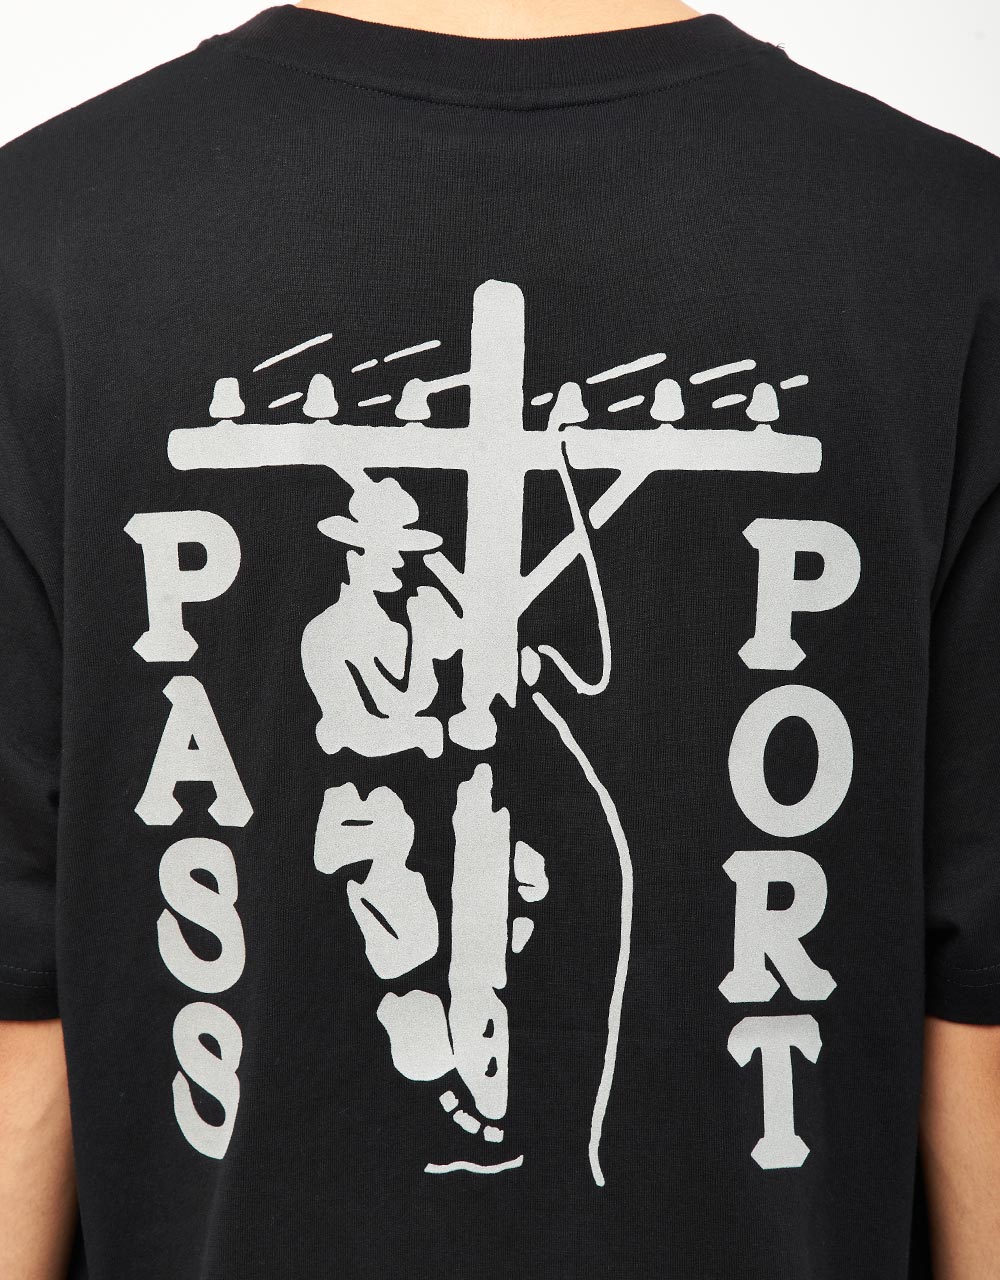 Pass Port Line~Worx Pocket T-Shirt - Black